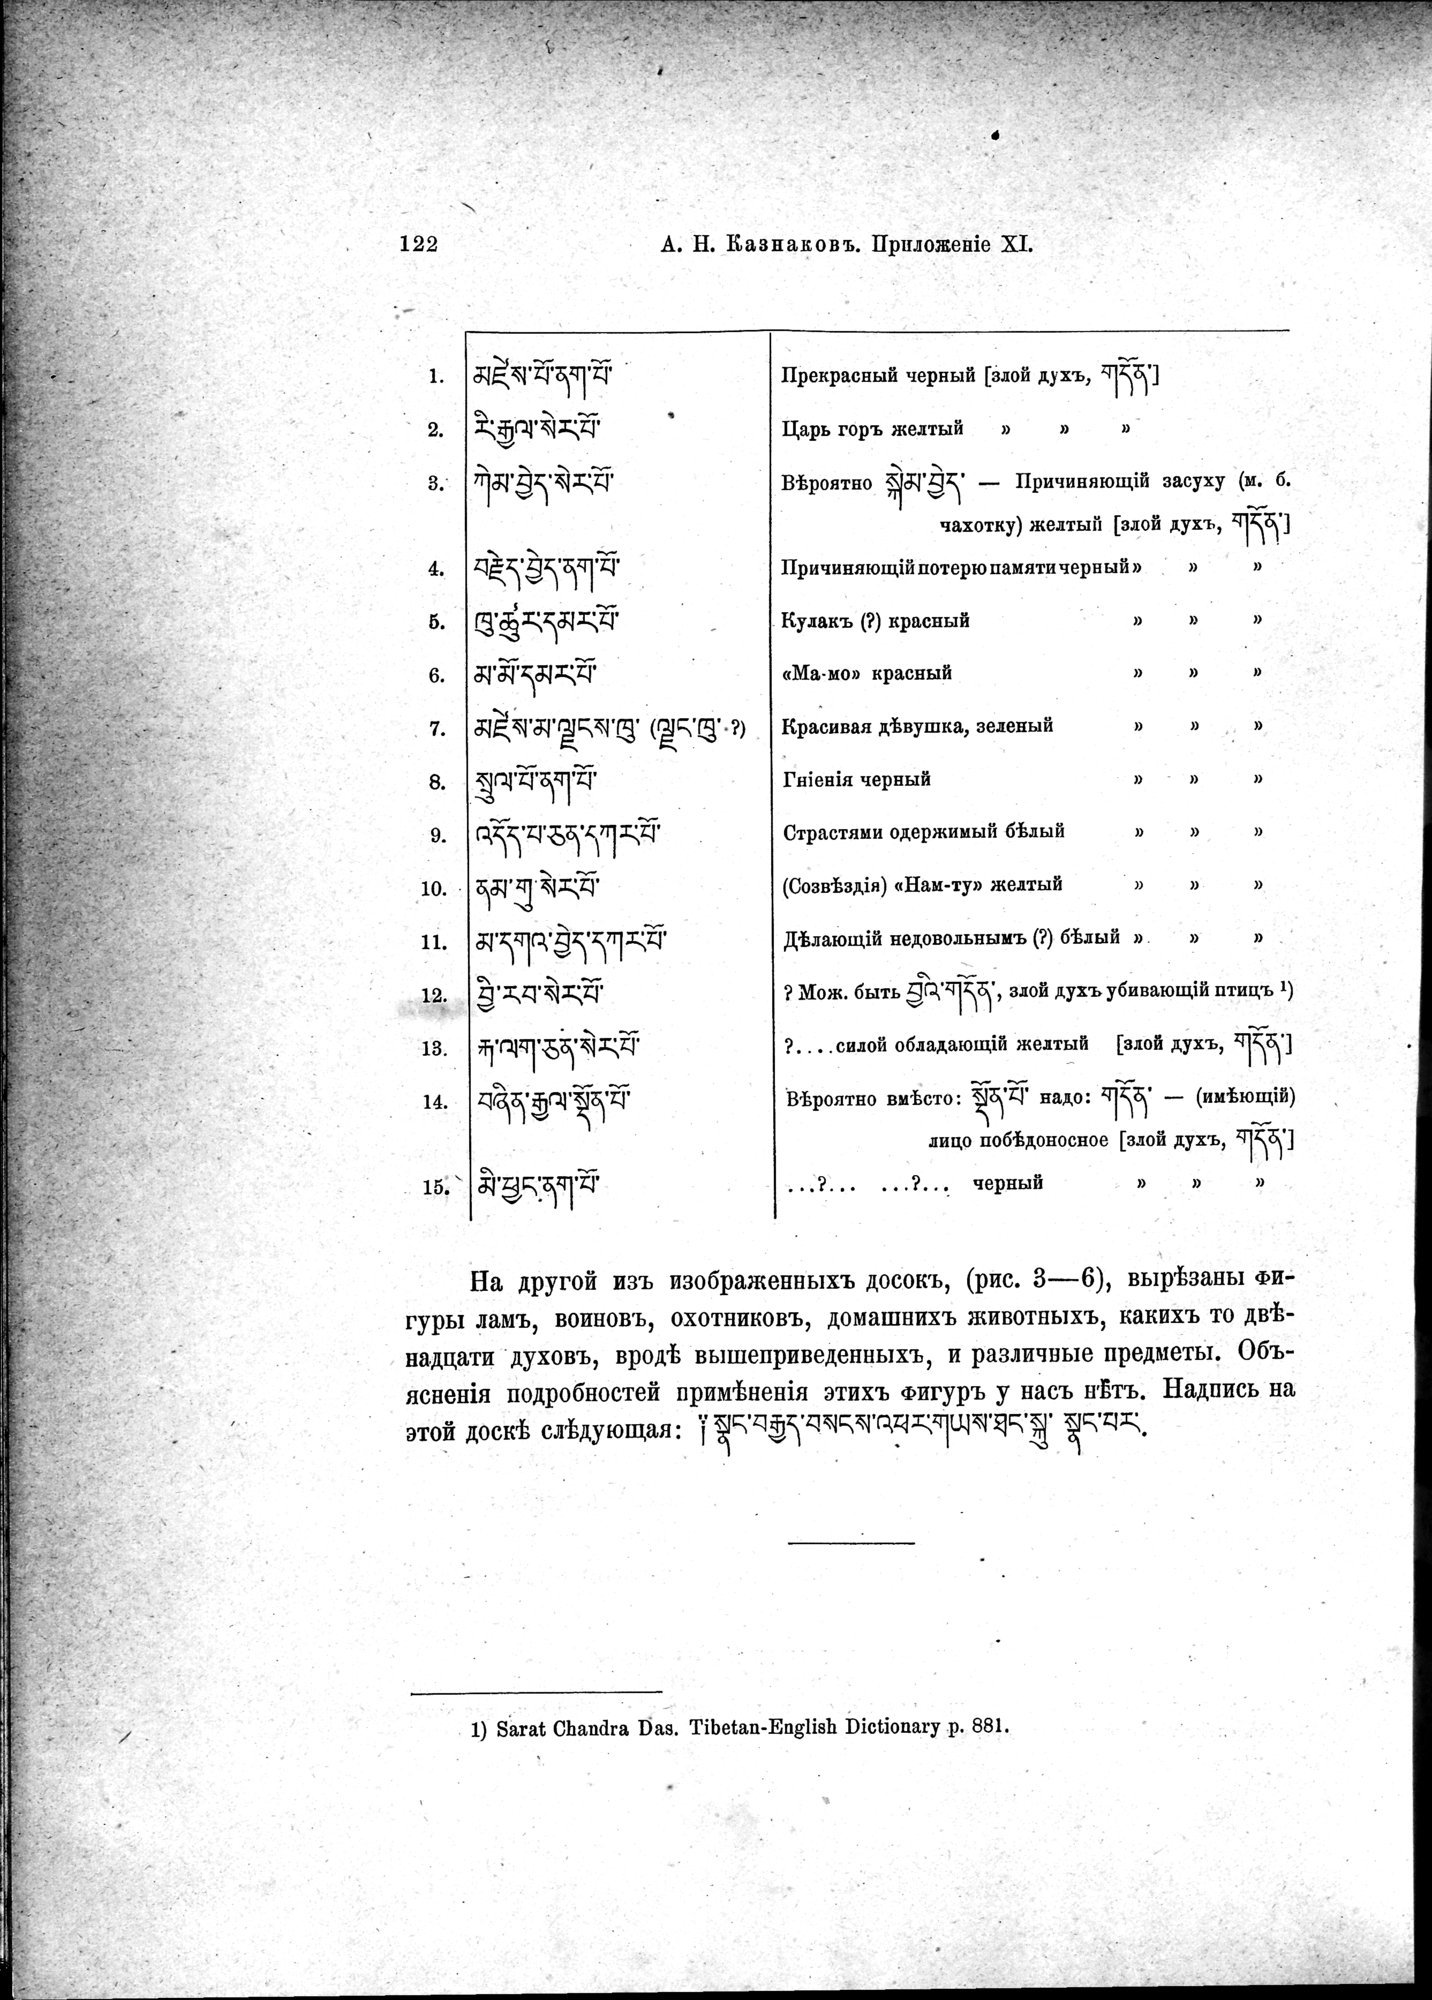 Mongoliia i Kam : vol.3 / Page 180 (Grayscale High Resolution Image)